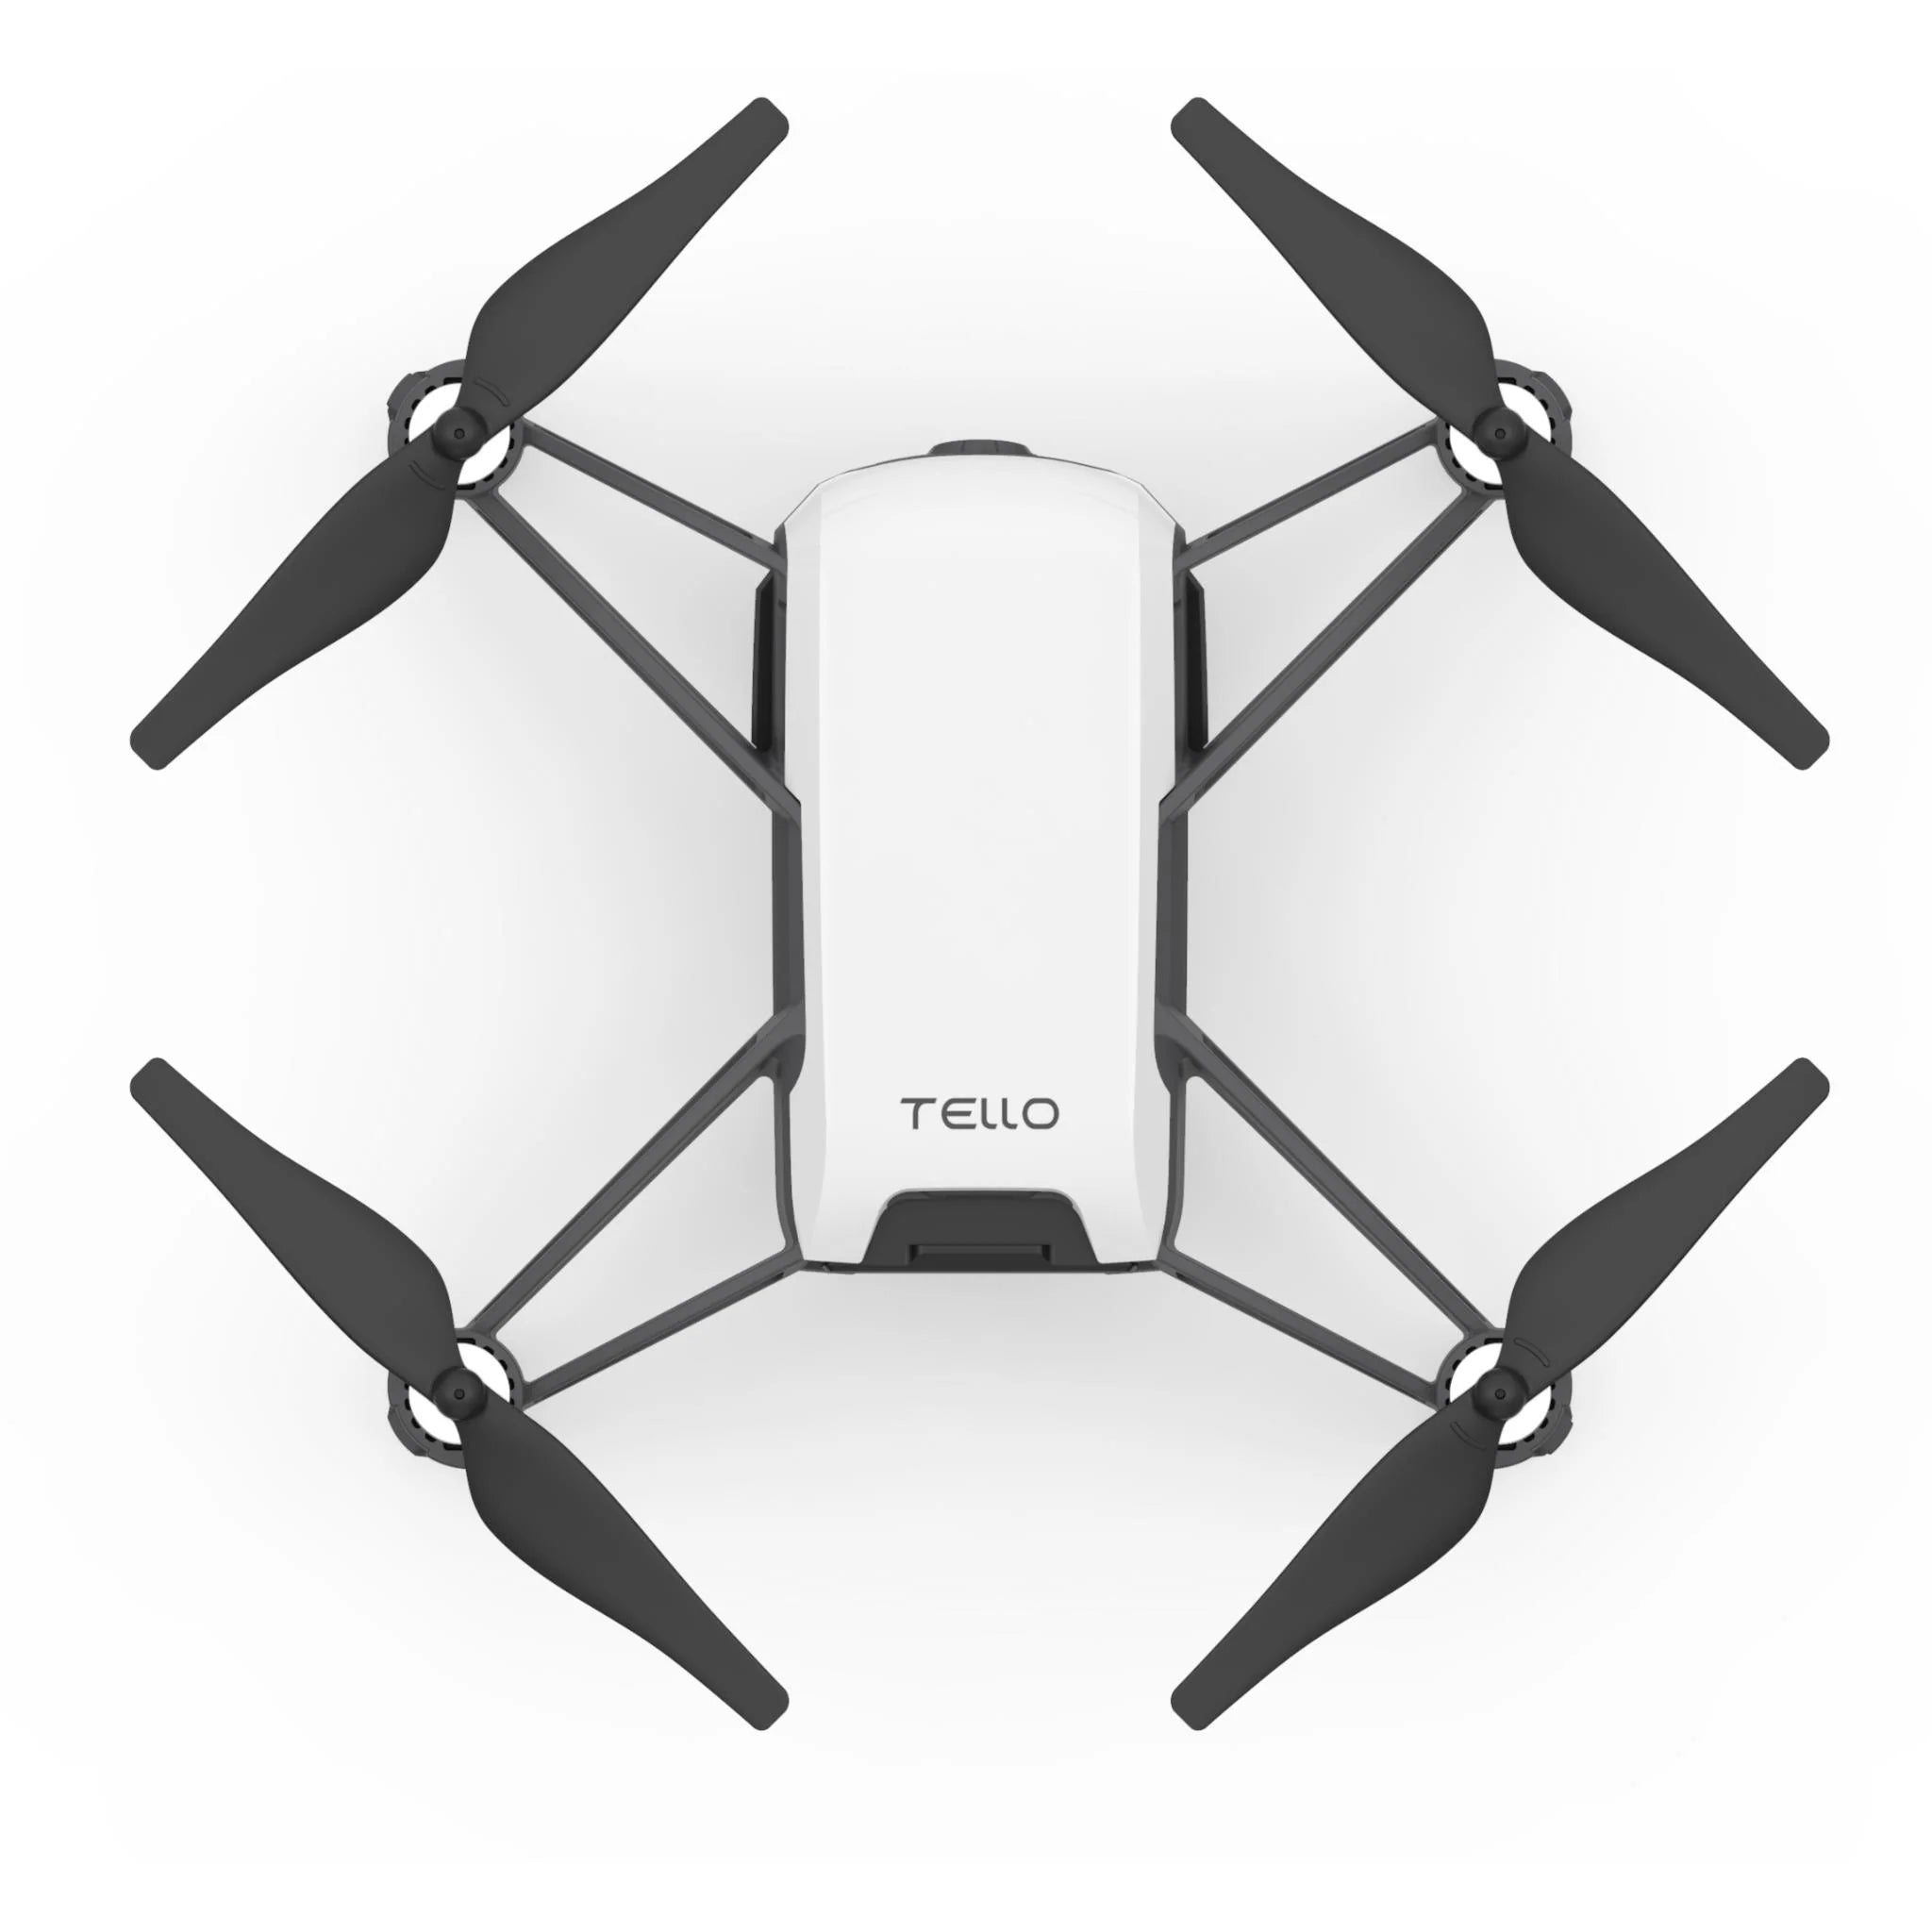 Ryze Tello Drone Powered by DJI (White)